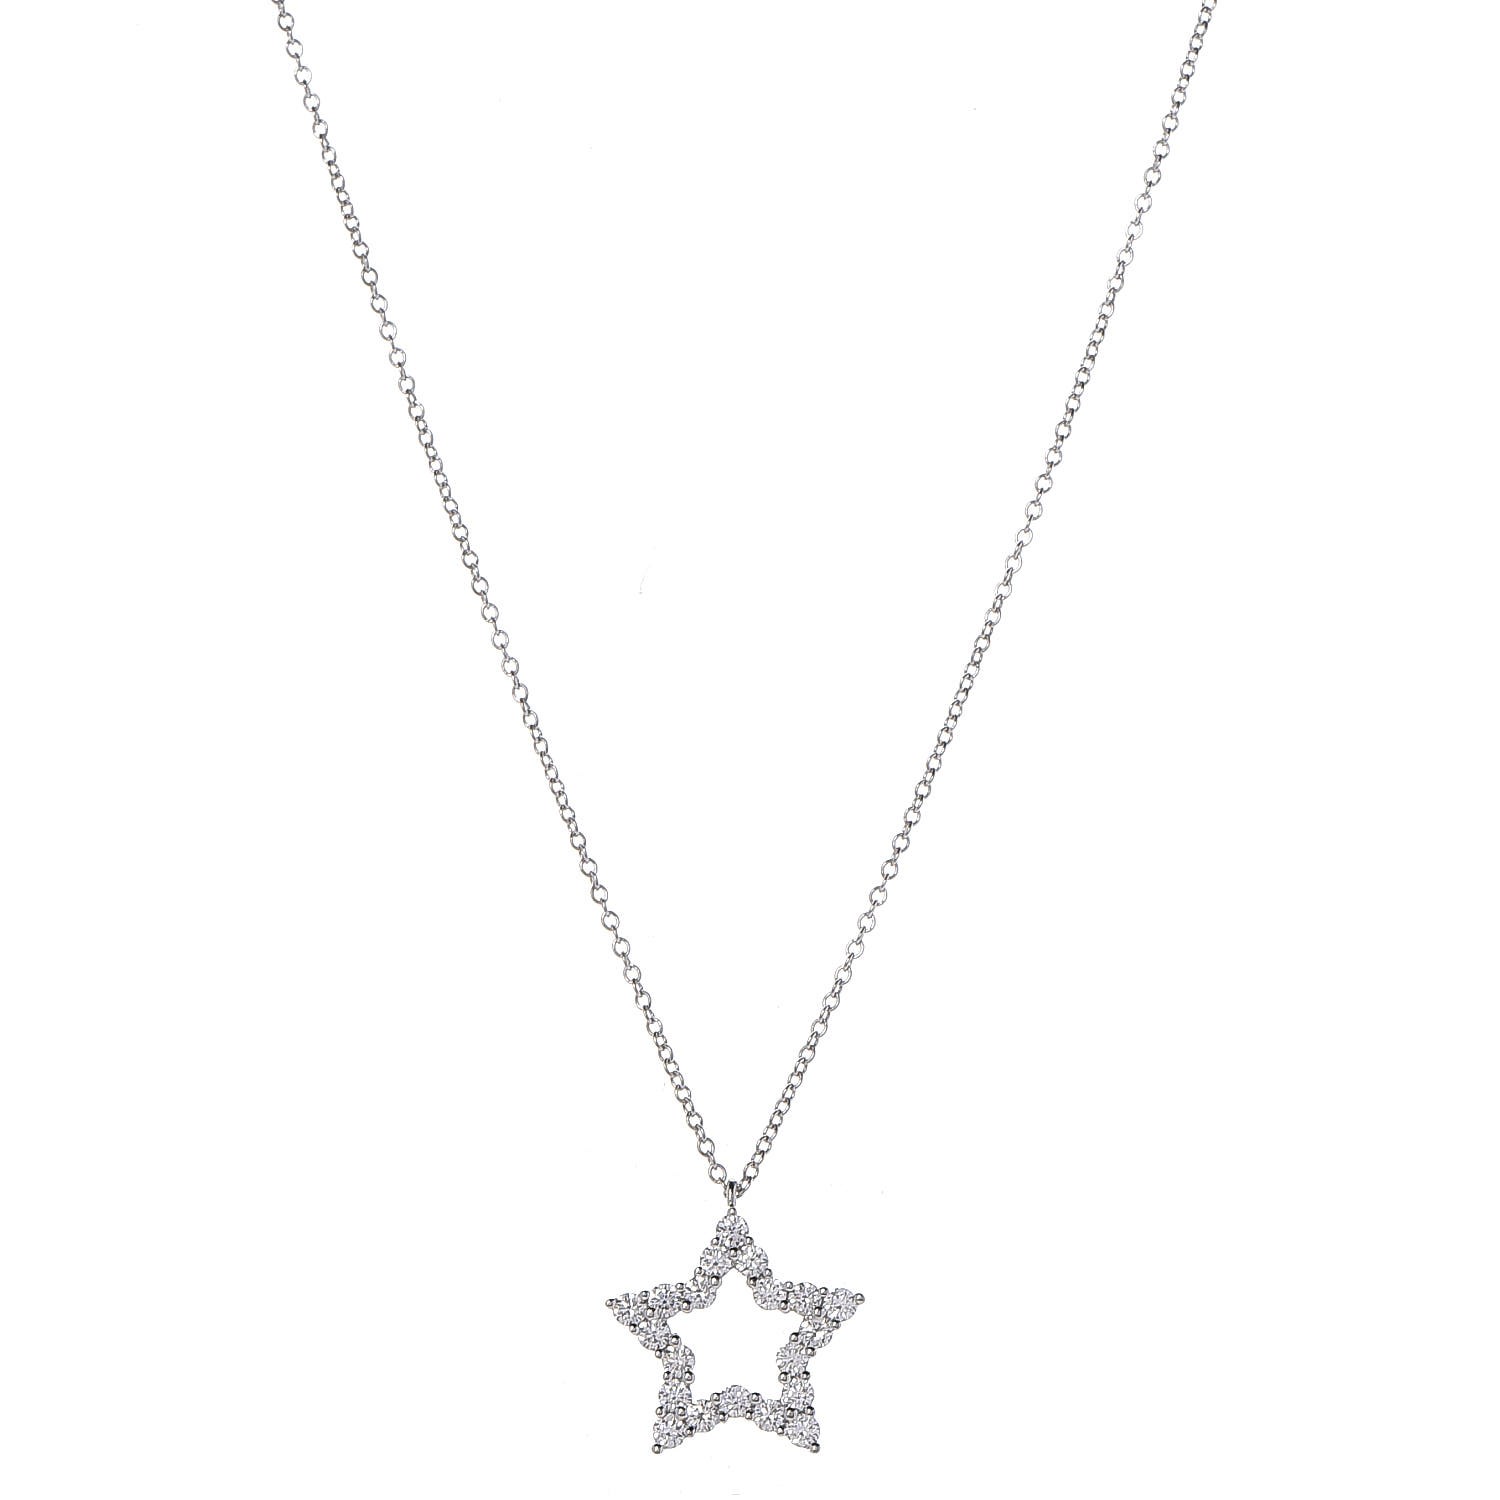 tiffany & co star necklace